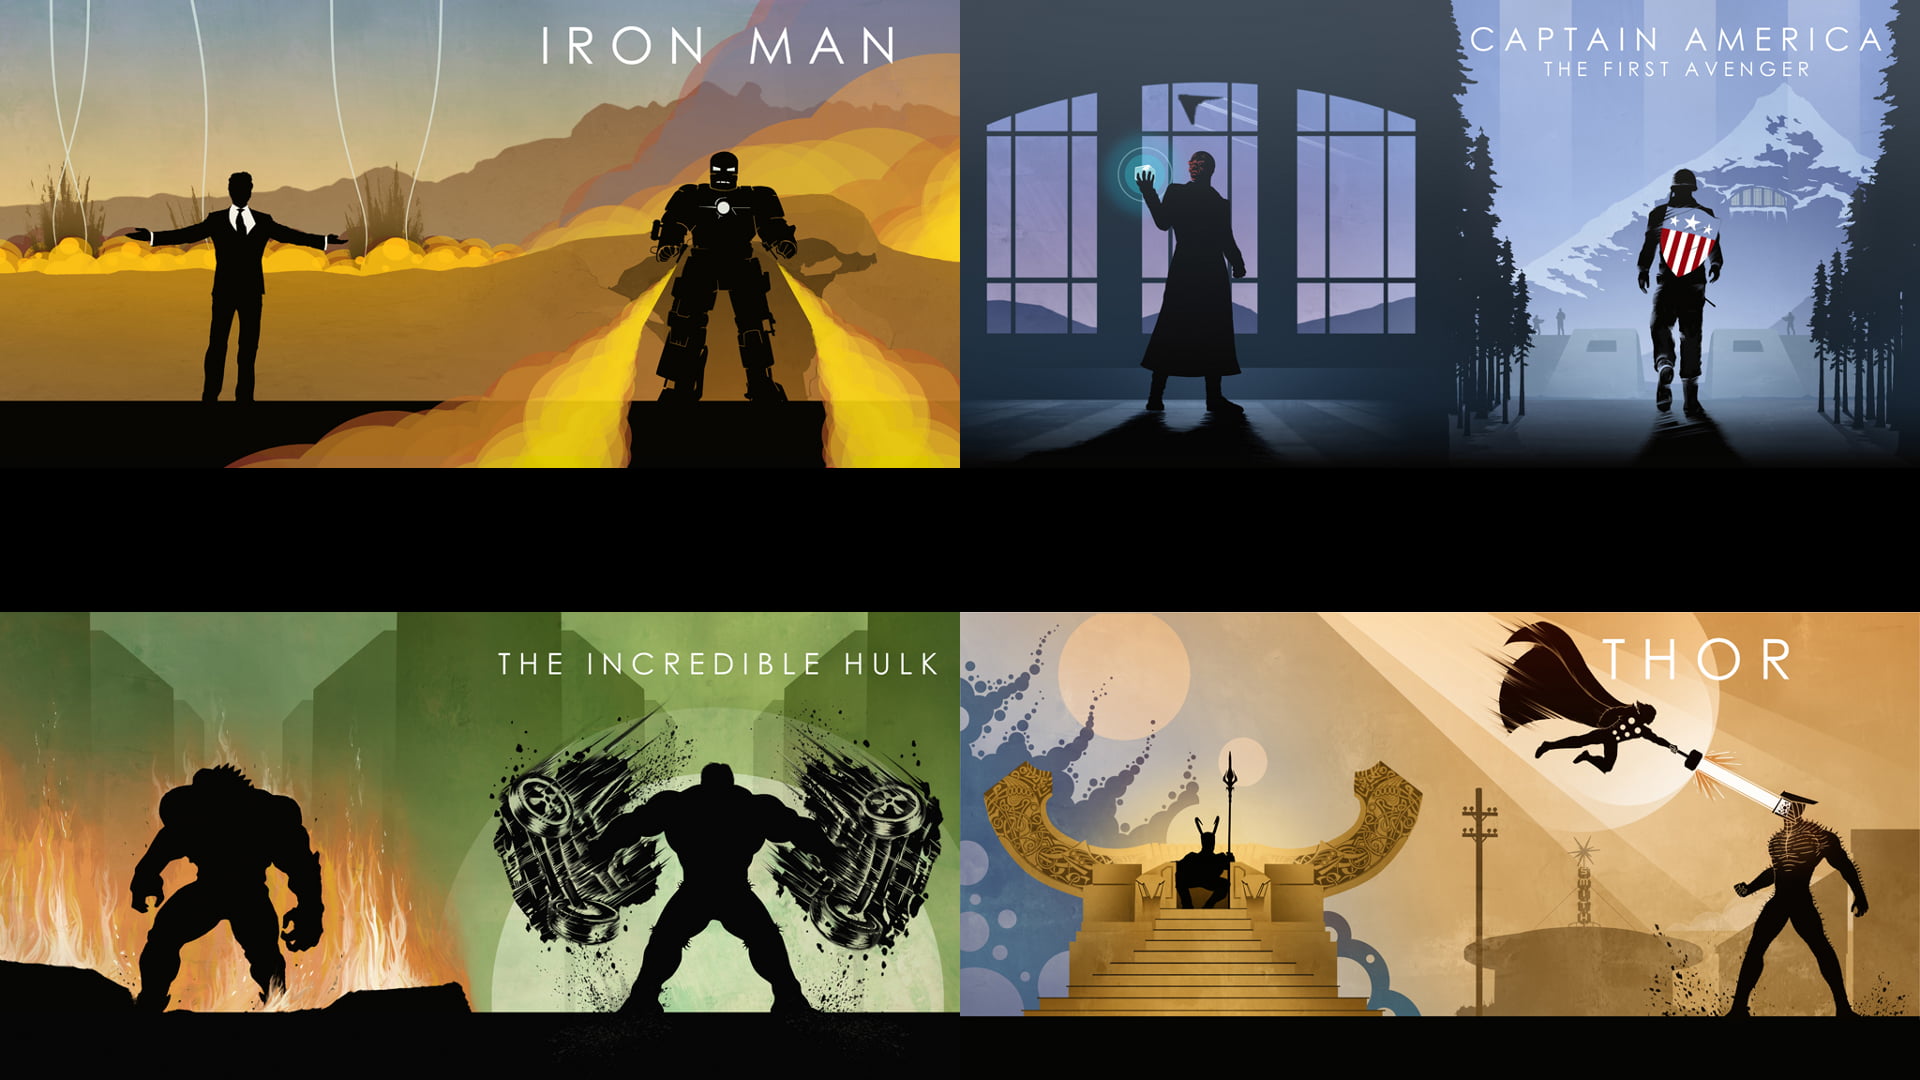 Avengers 2 Concept Art, silhouette, men, captain america the first avenger, wall  building feature